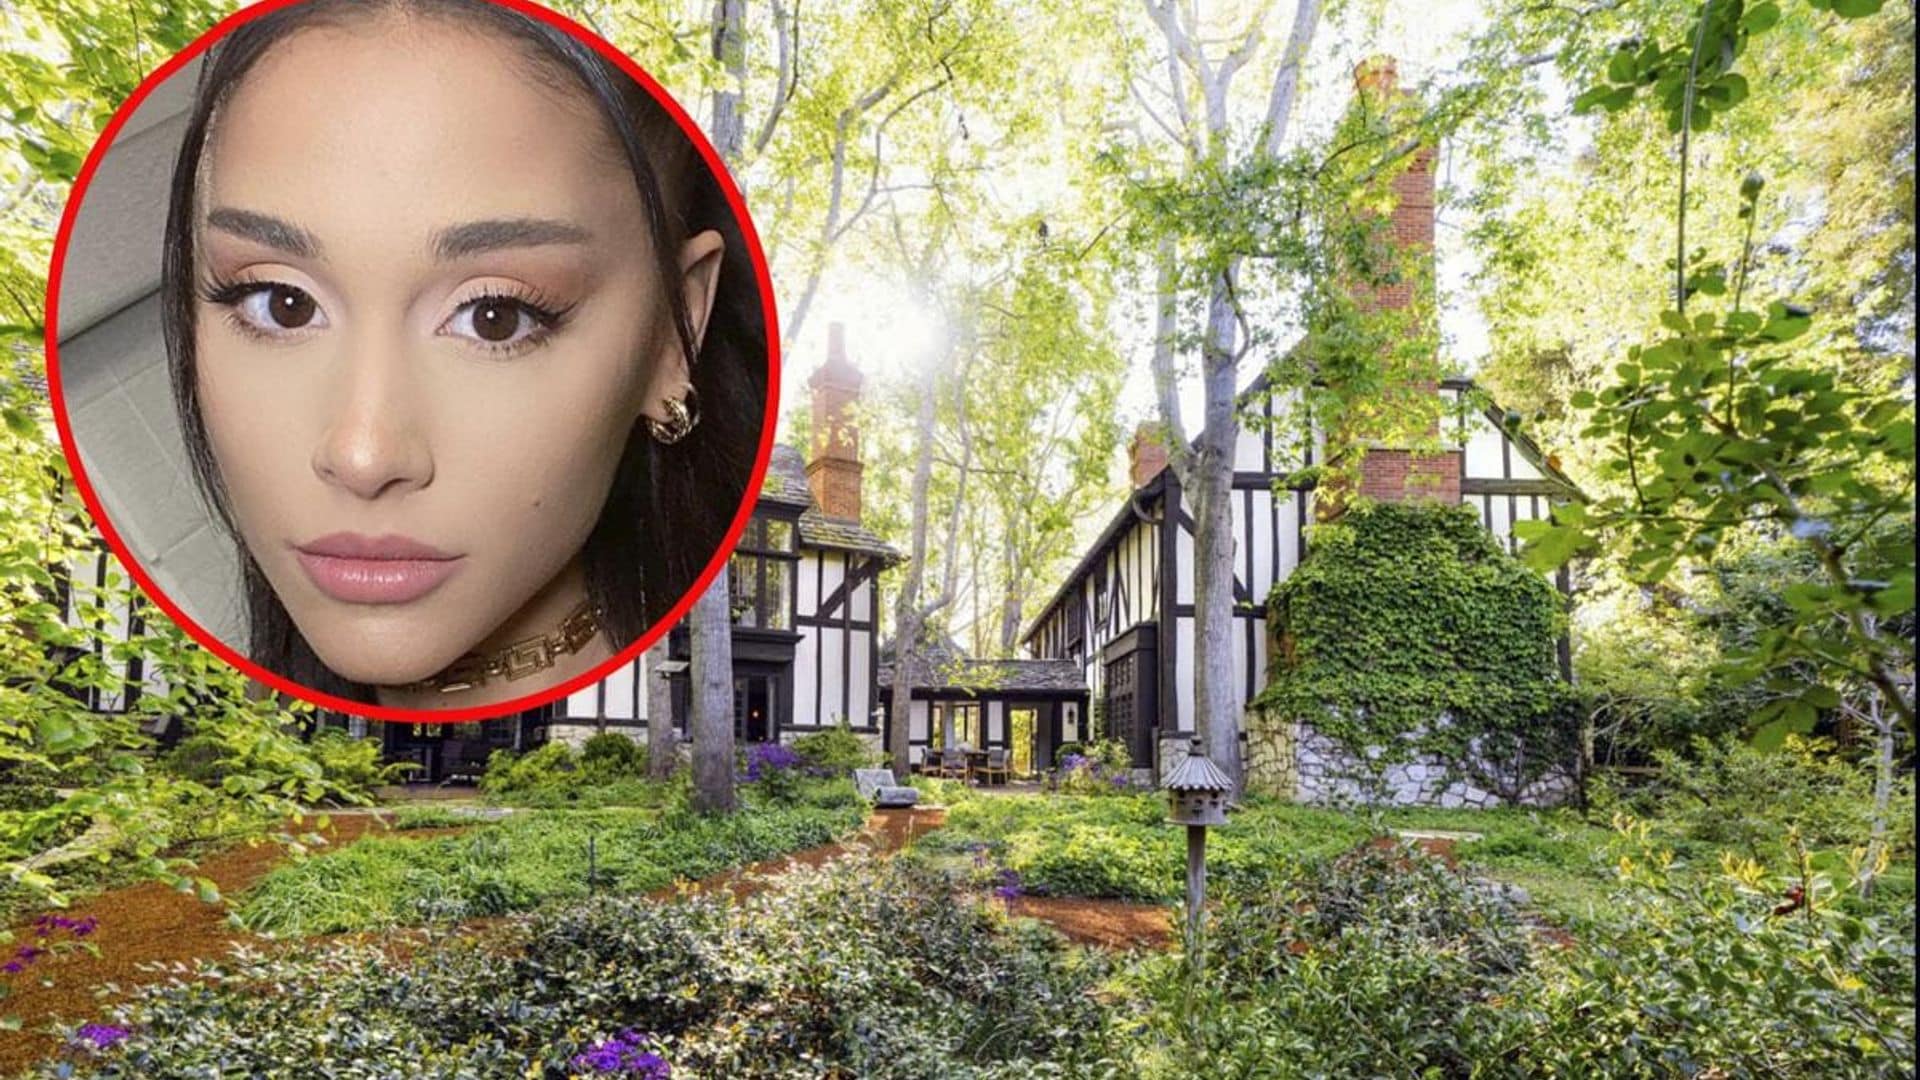 Ariana Grande has sold her impressive Montecito estate for $9.1 million [PHOTOS]